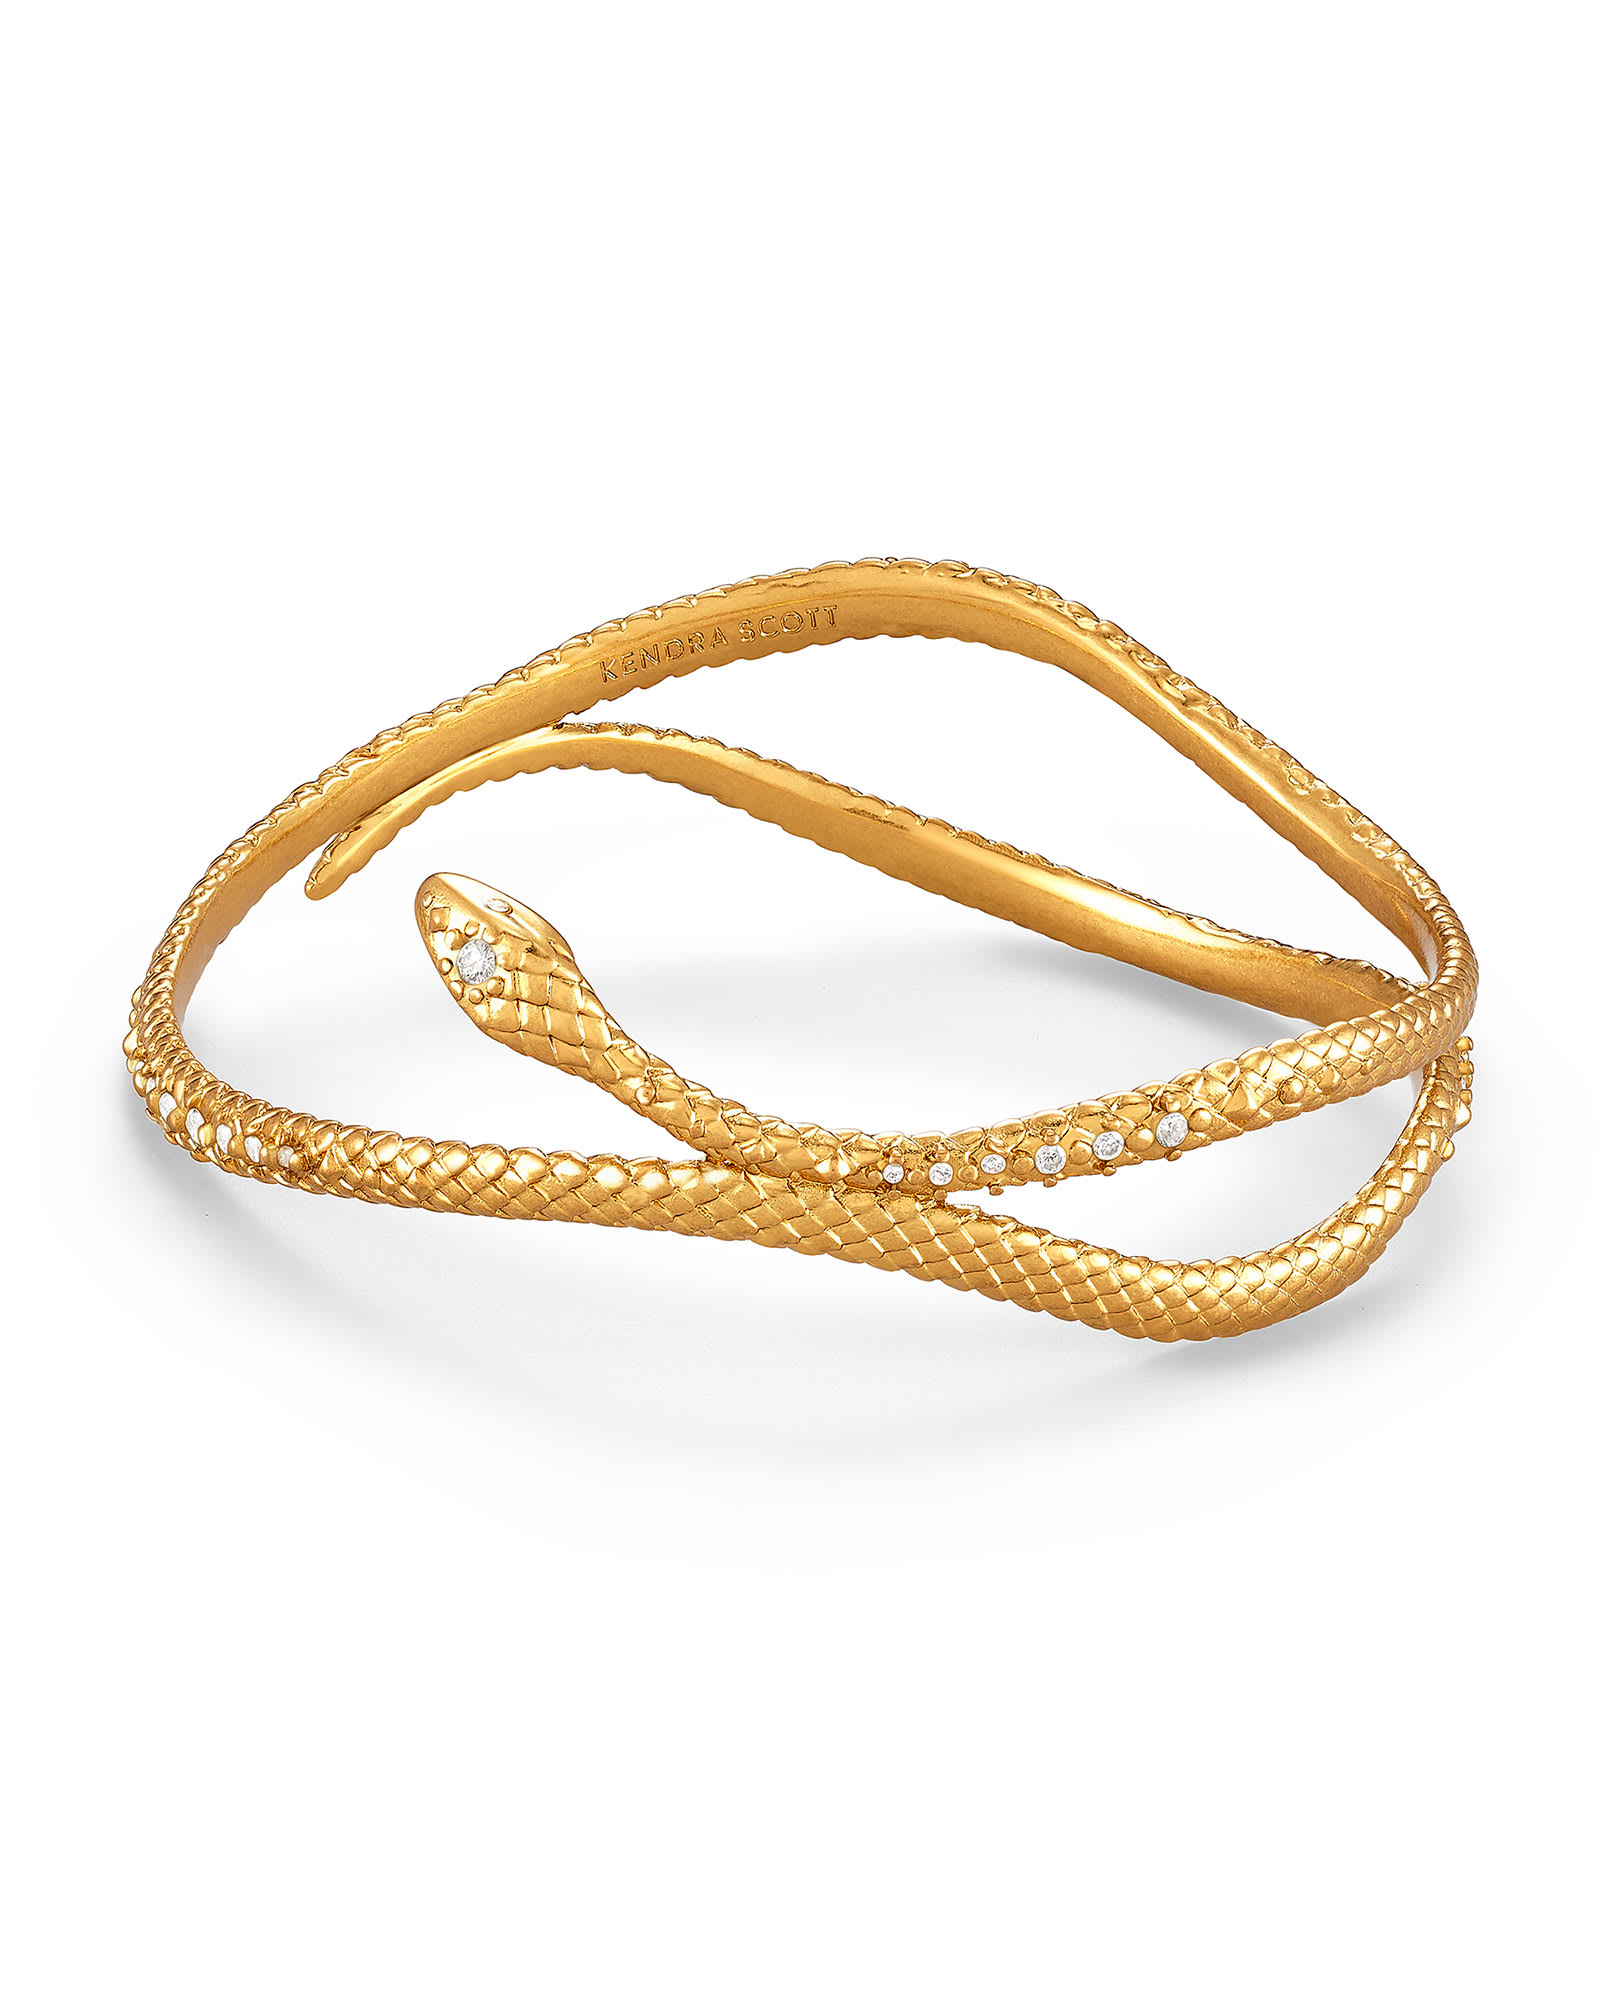 Diamond Cut Snake Chain Necklace in 18k Gold Vermeil